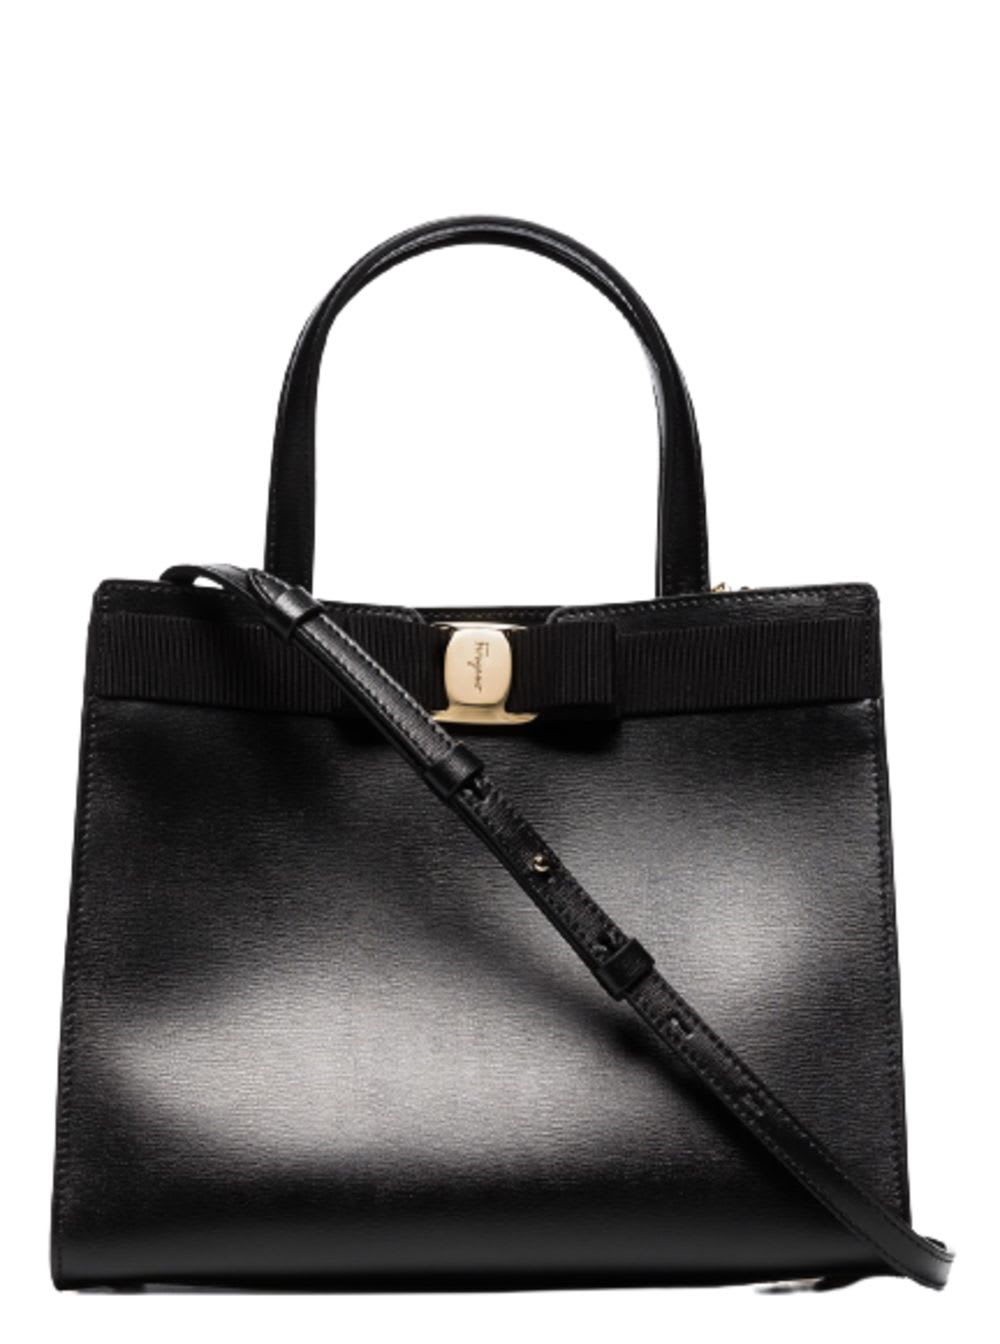 Ferragamo Black Leather Vara Handbag